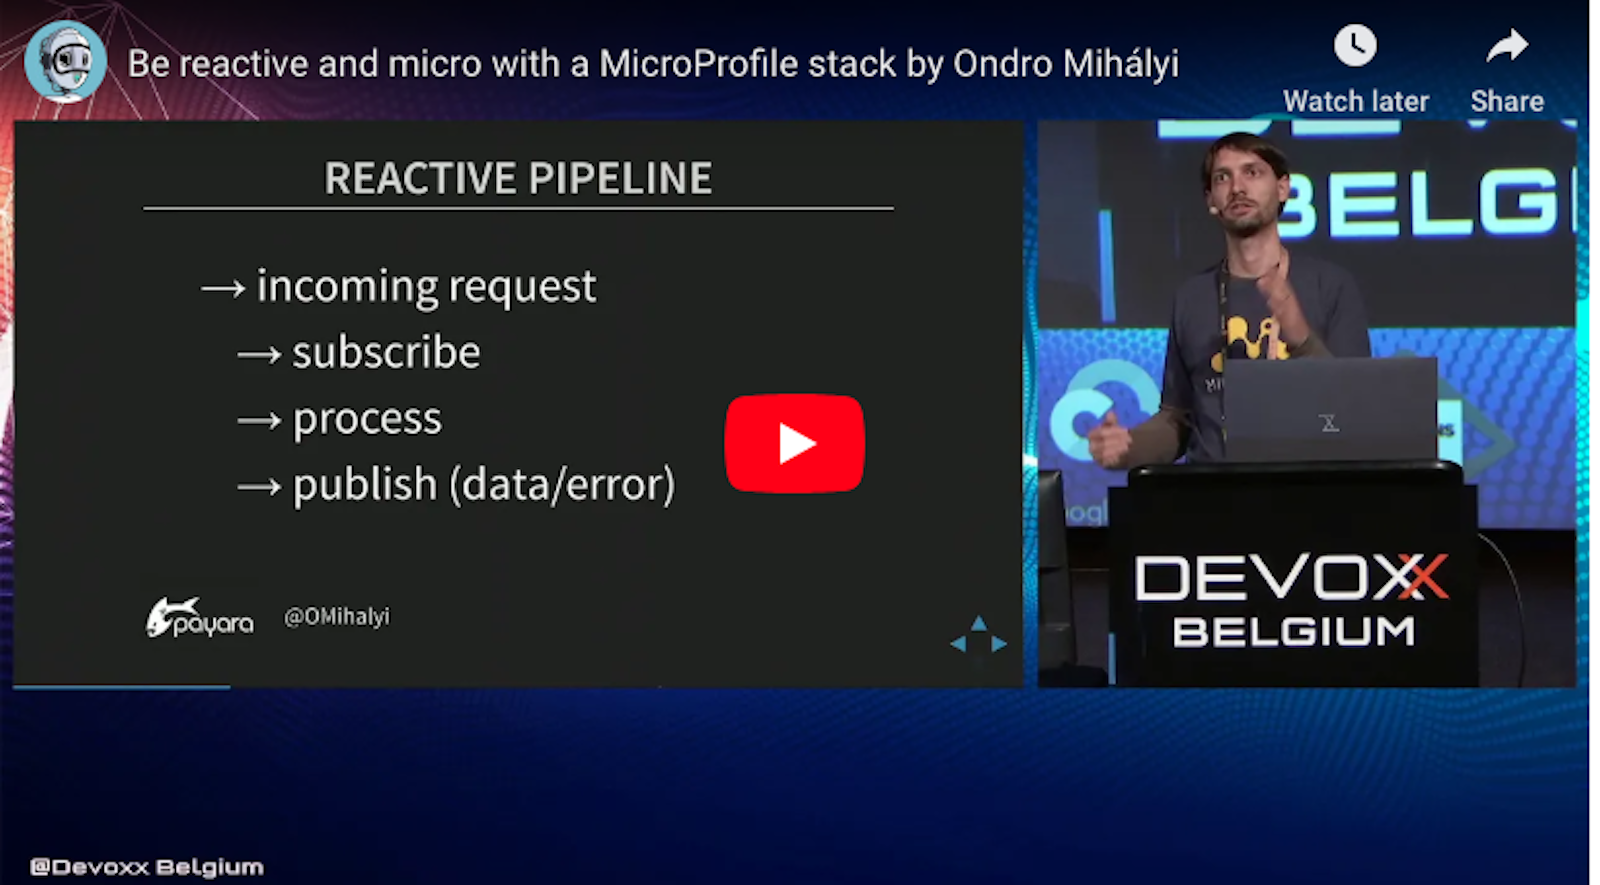 Devoxx videos of microprofile talks